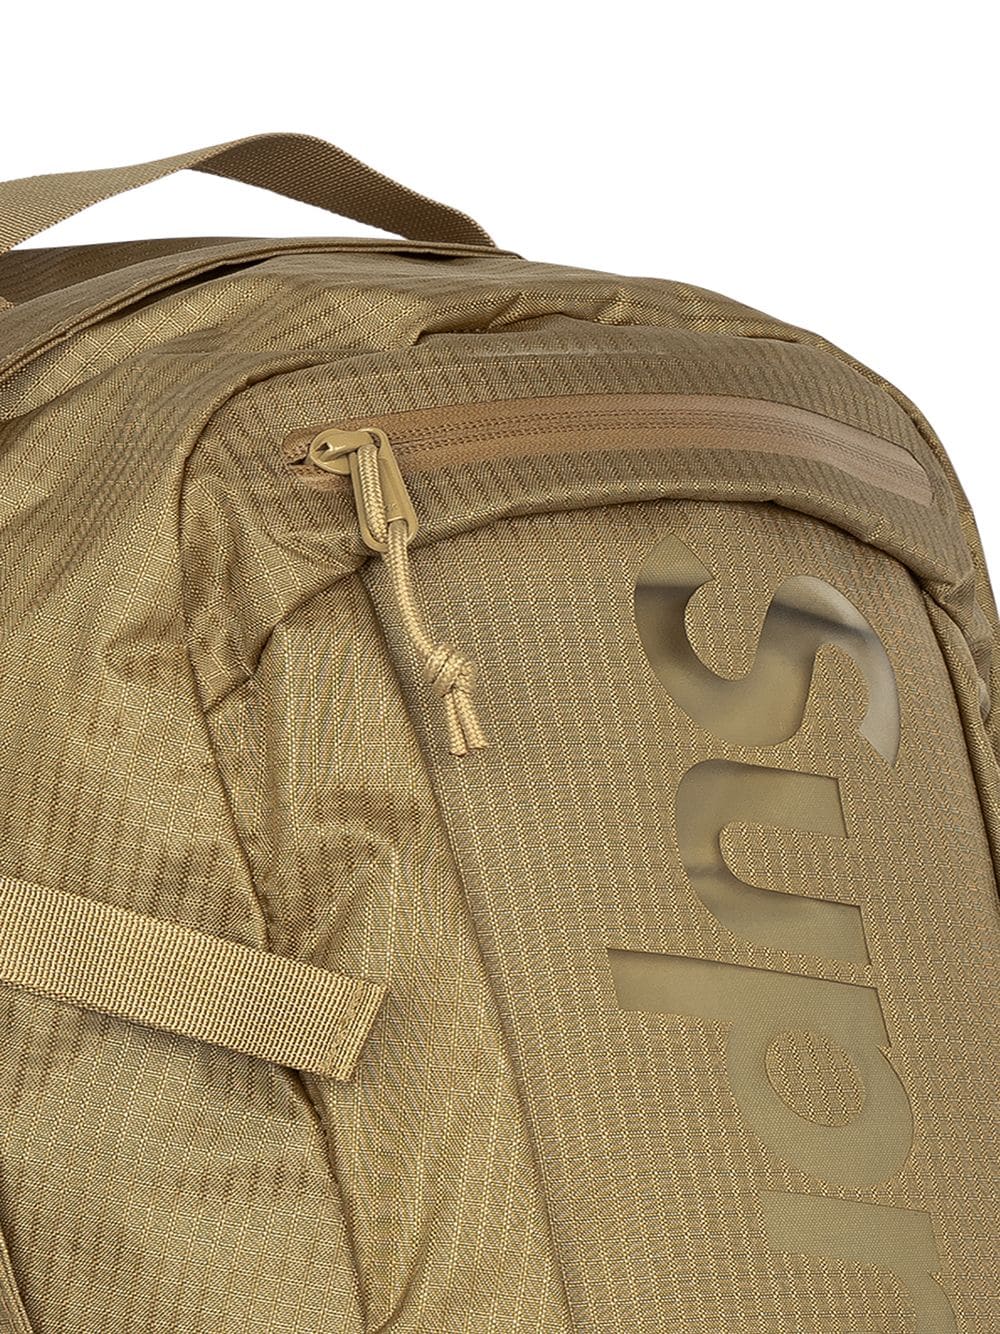 Supreme Backpack (SS20) Gold